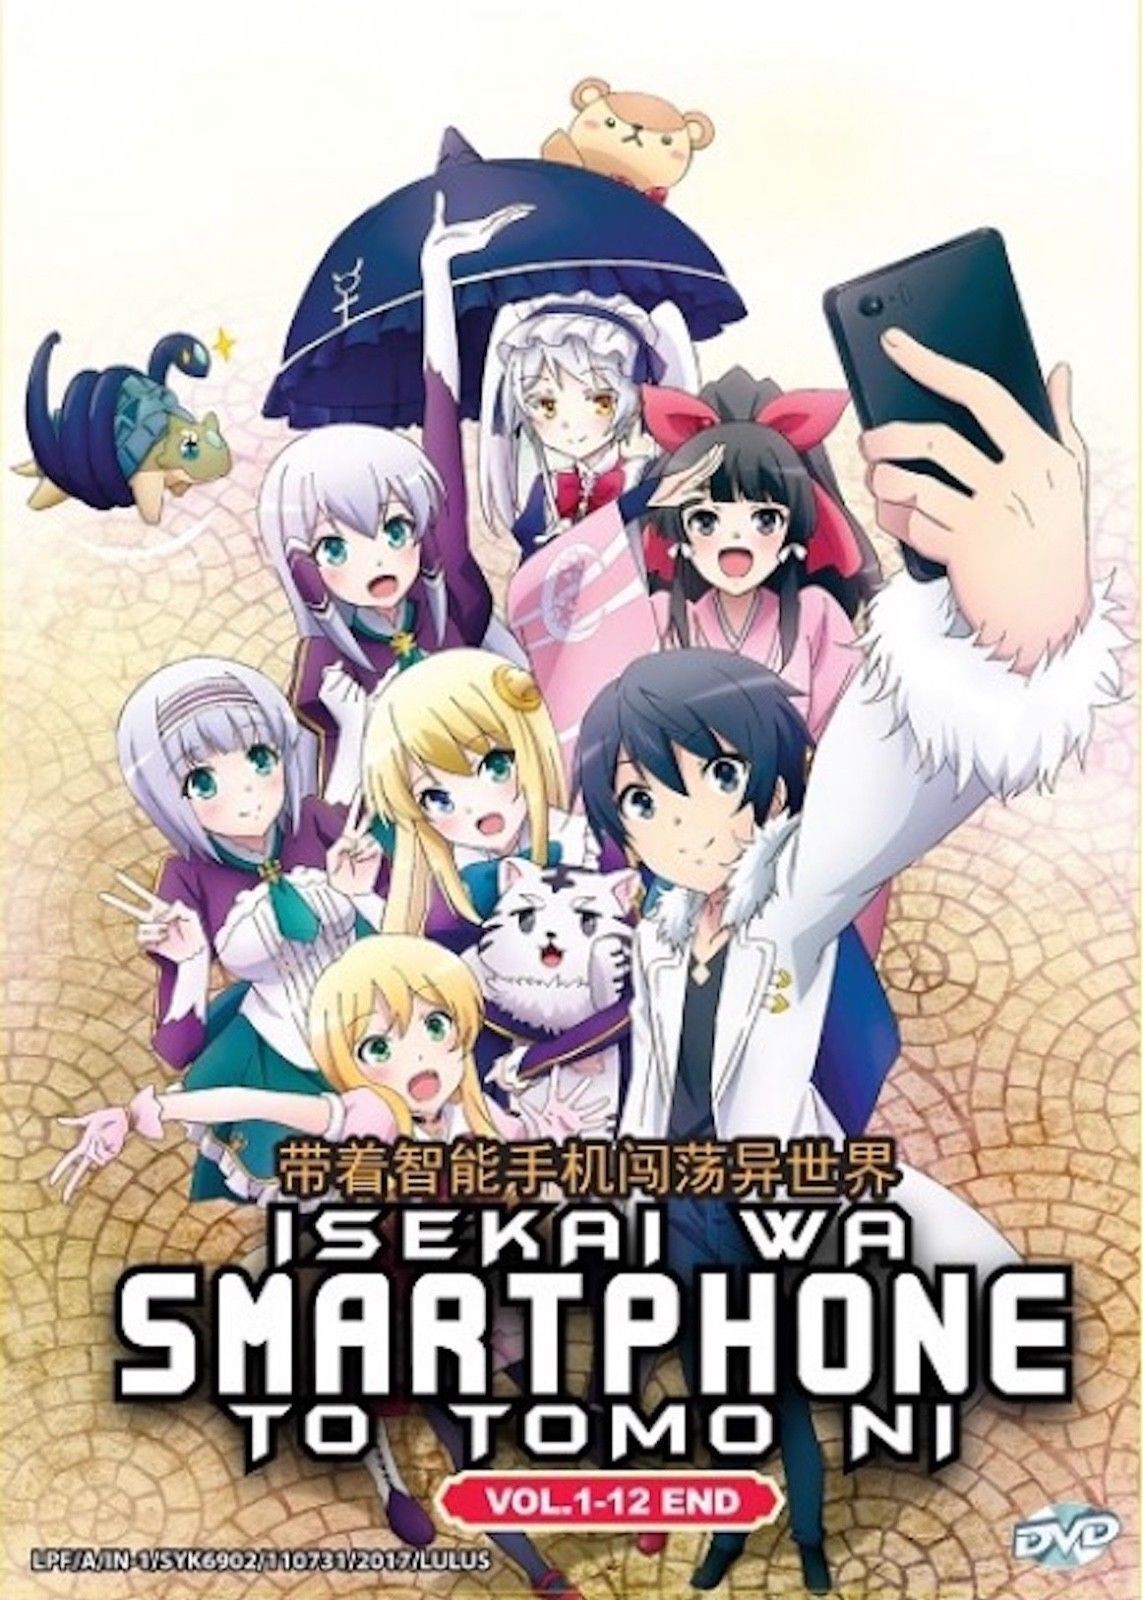 DVD Anime Isekai Wa Smartphone To Tomo Ni Complete Series (1-12) English Dubbed